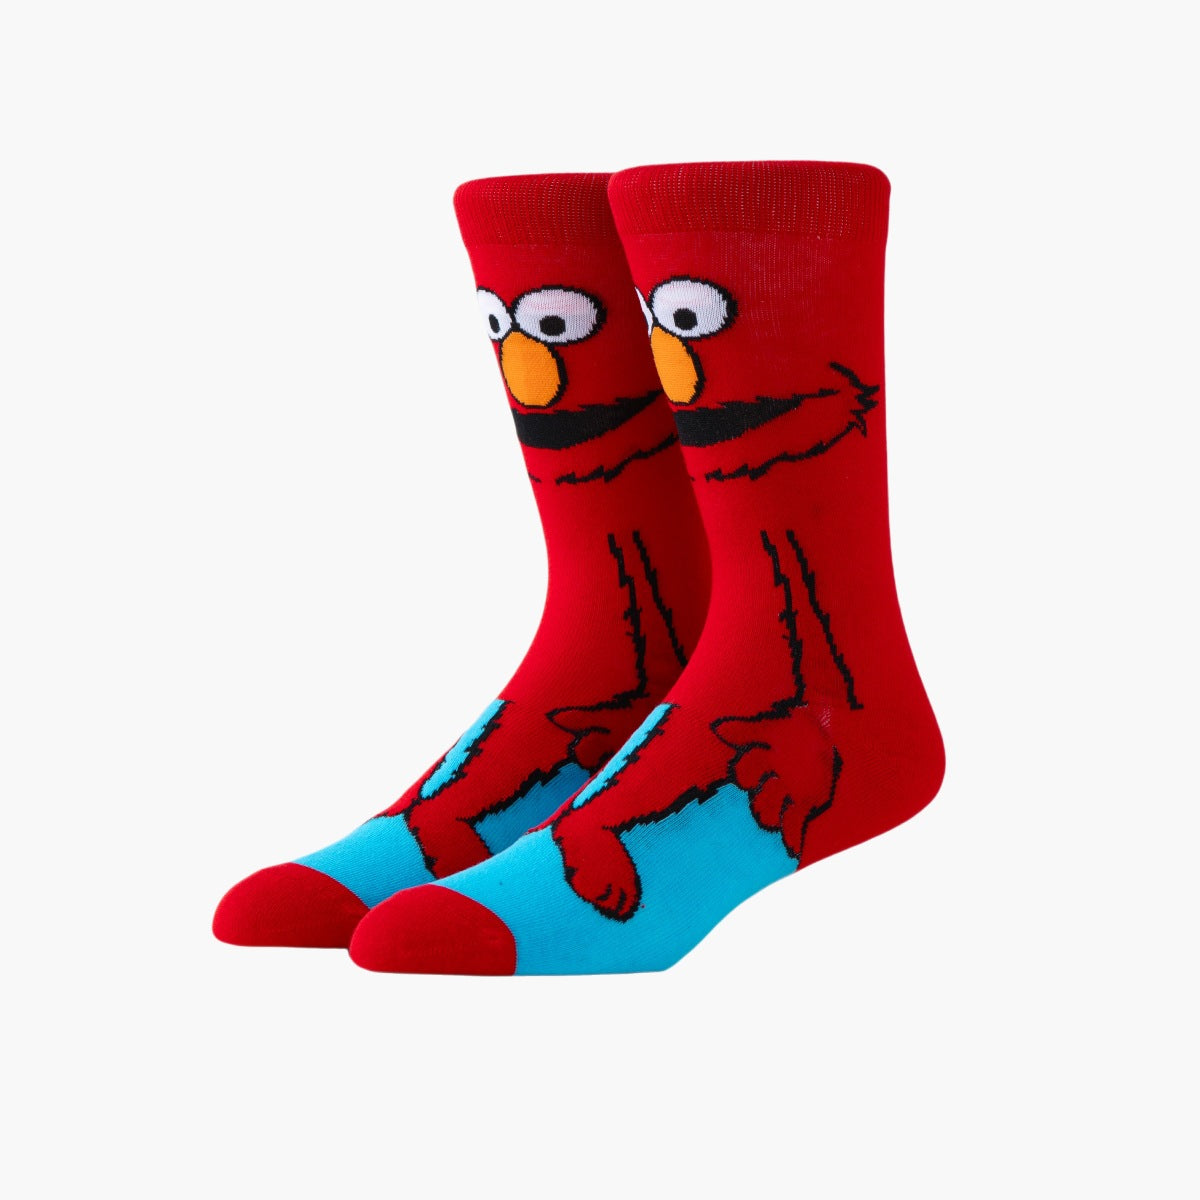 BamBam Cartoon spiderman mid-calf socks - BamBam